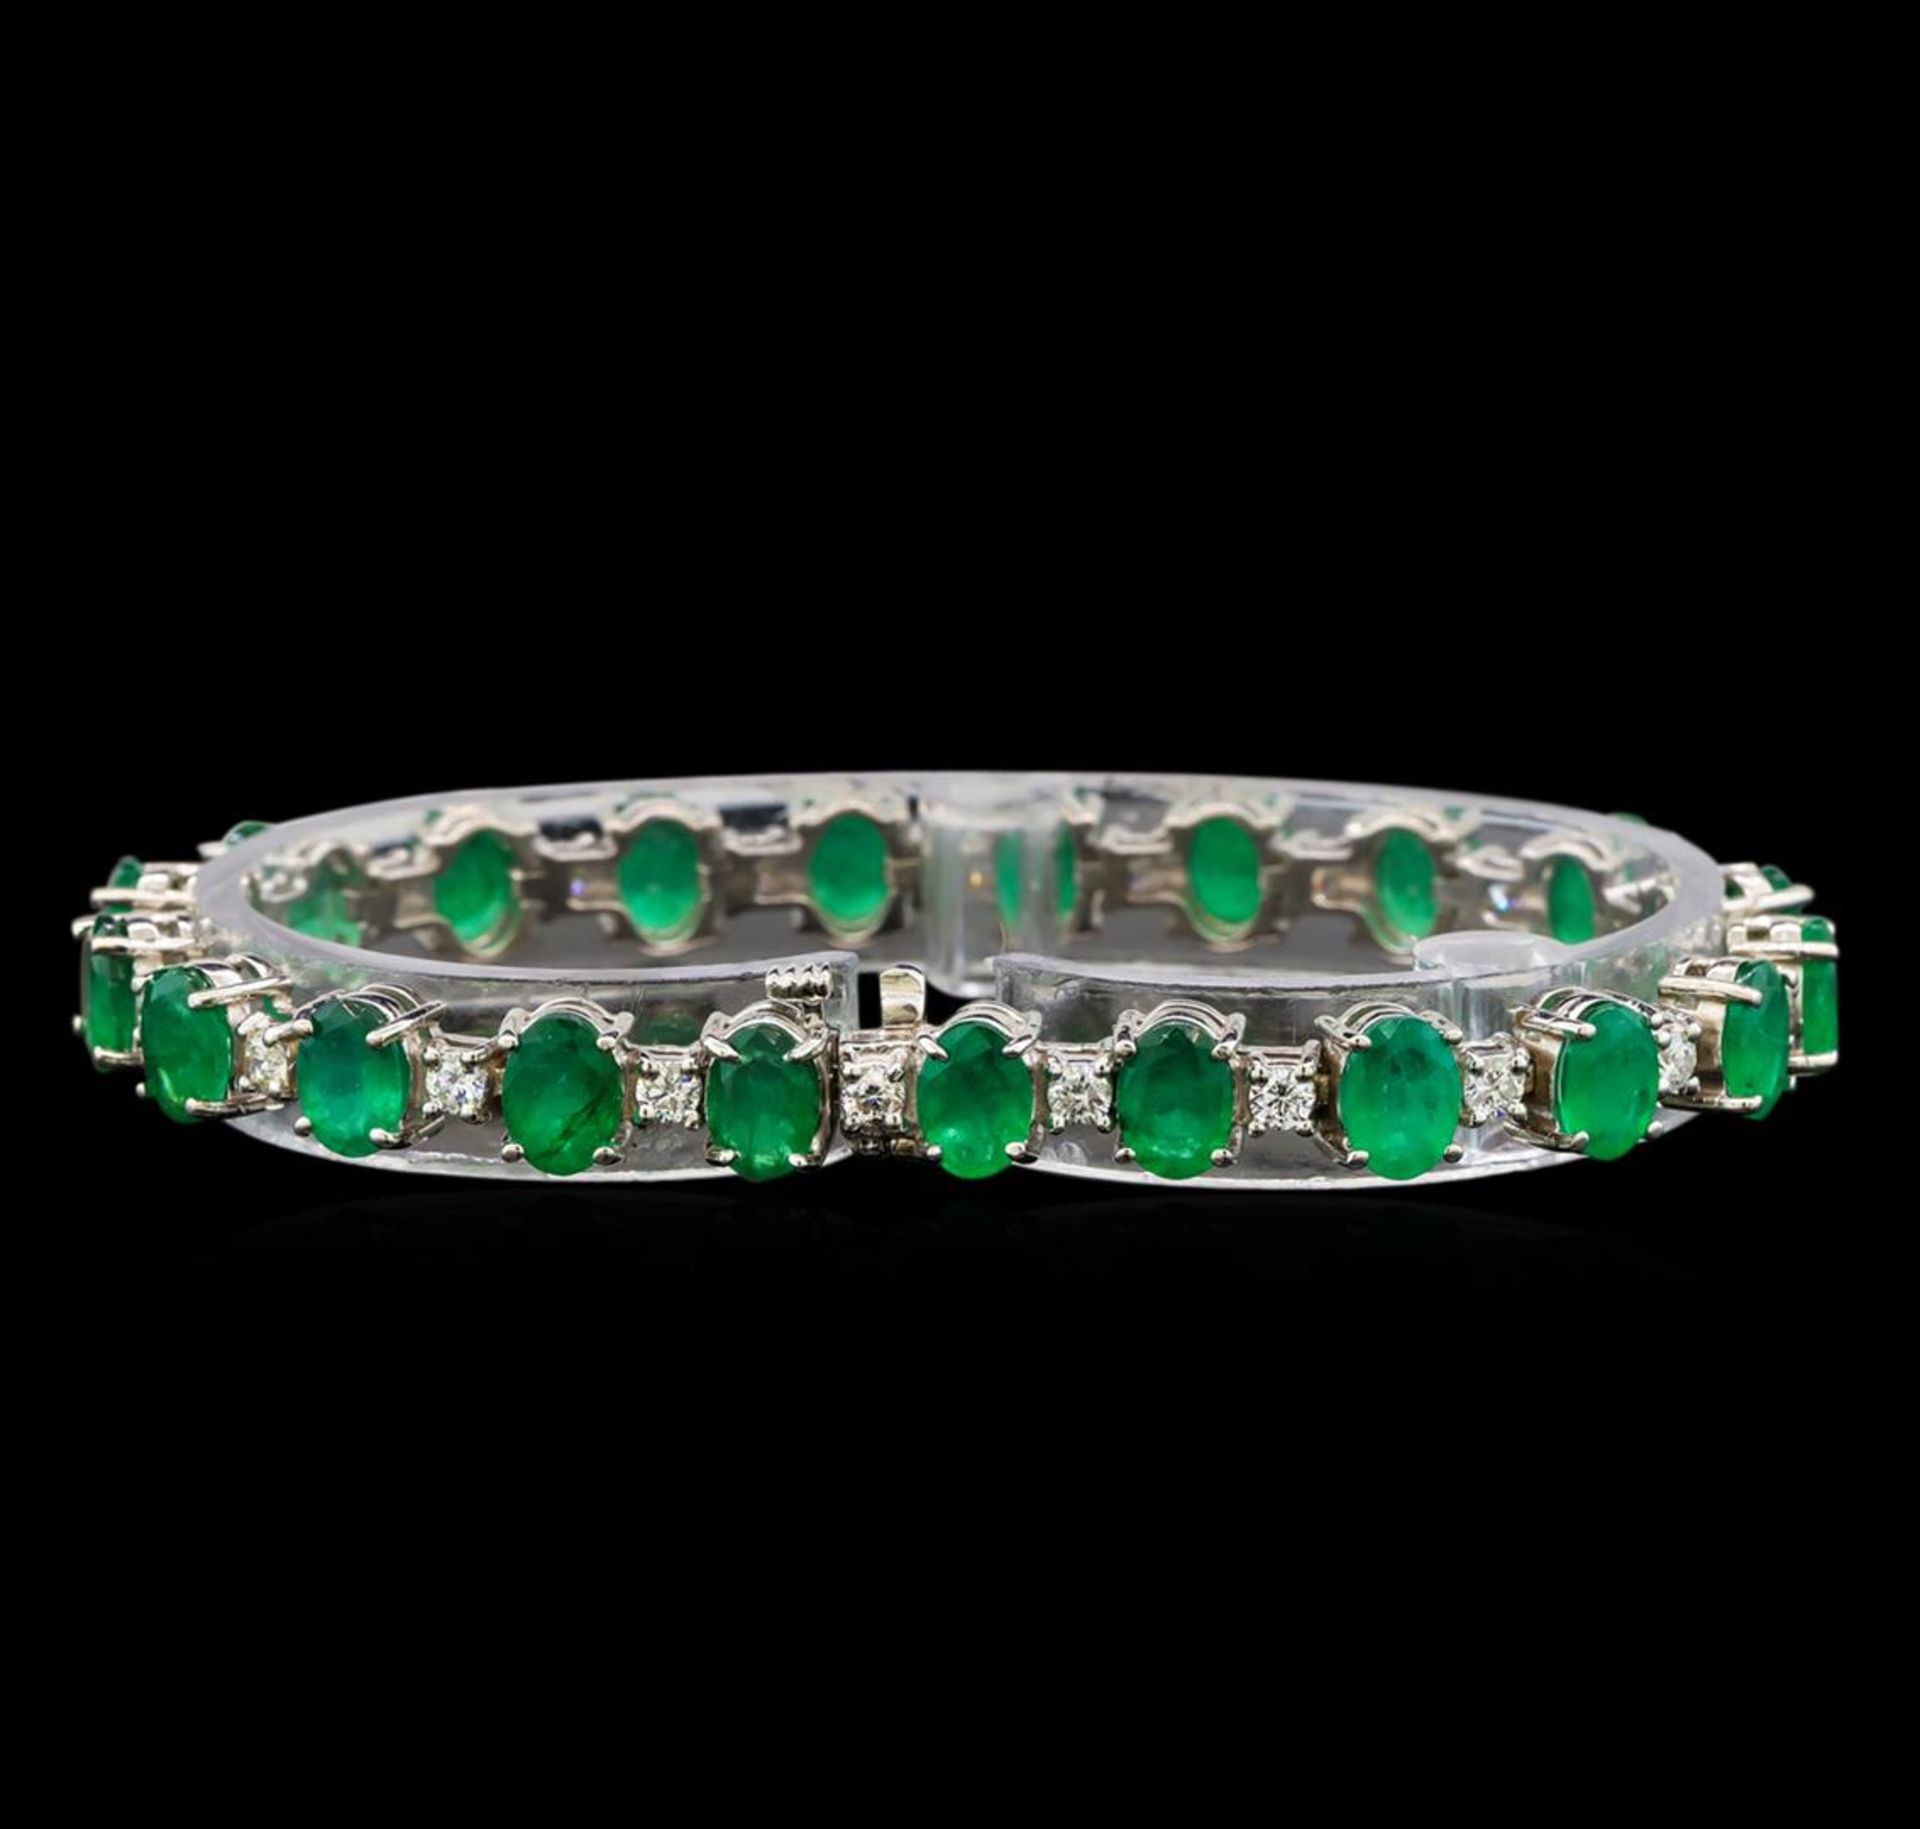 14KT White Gold 15.83 ctw Emerald and Diamond Bracelet - Image 2 of 4